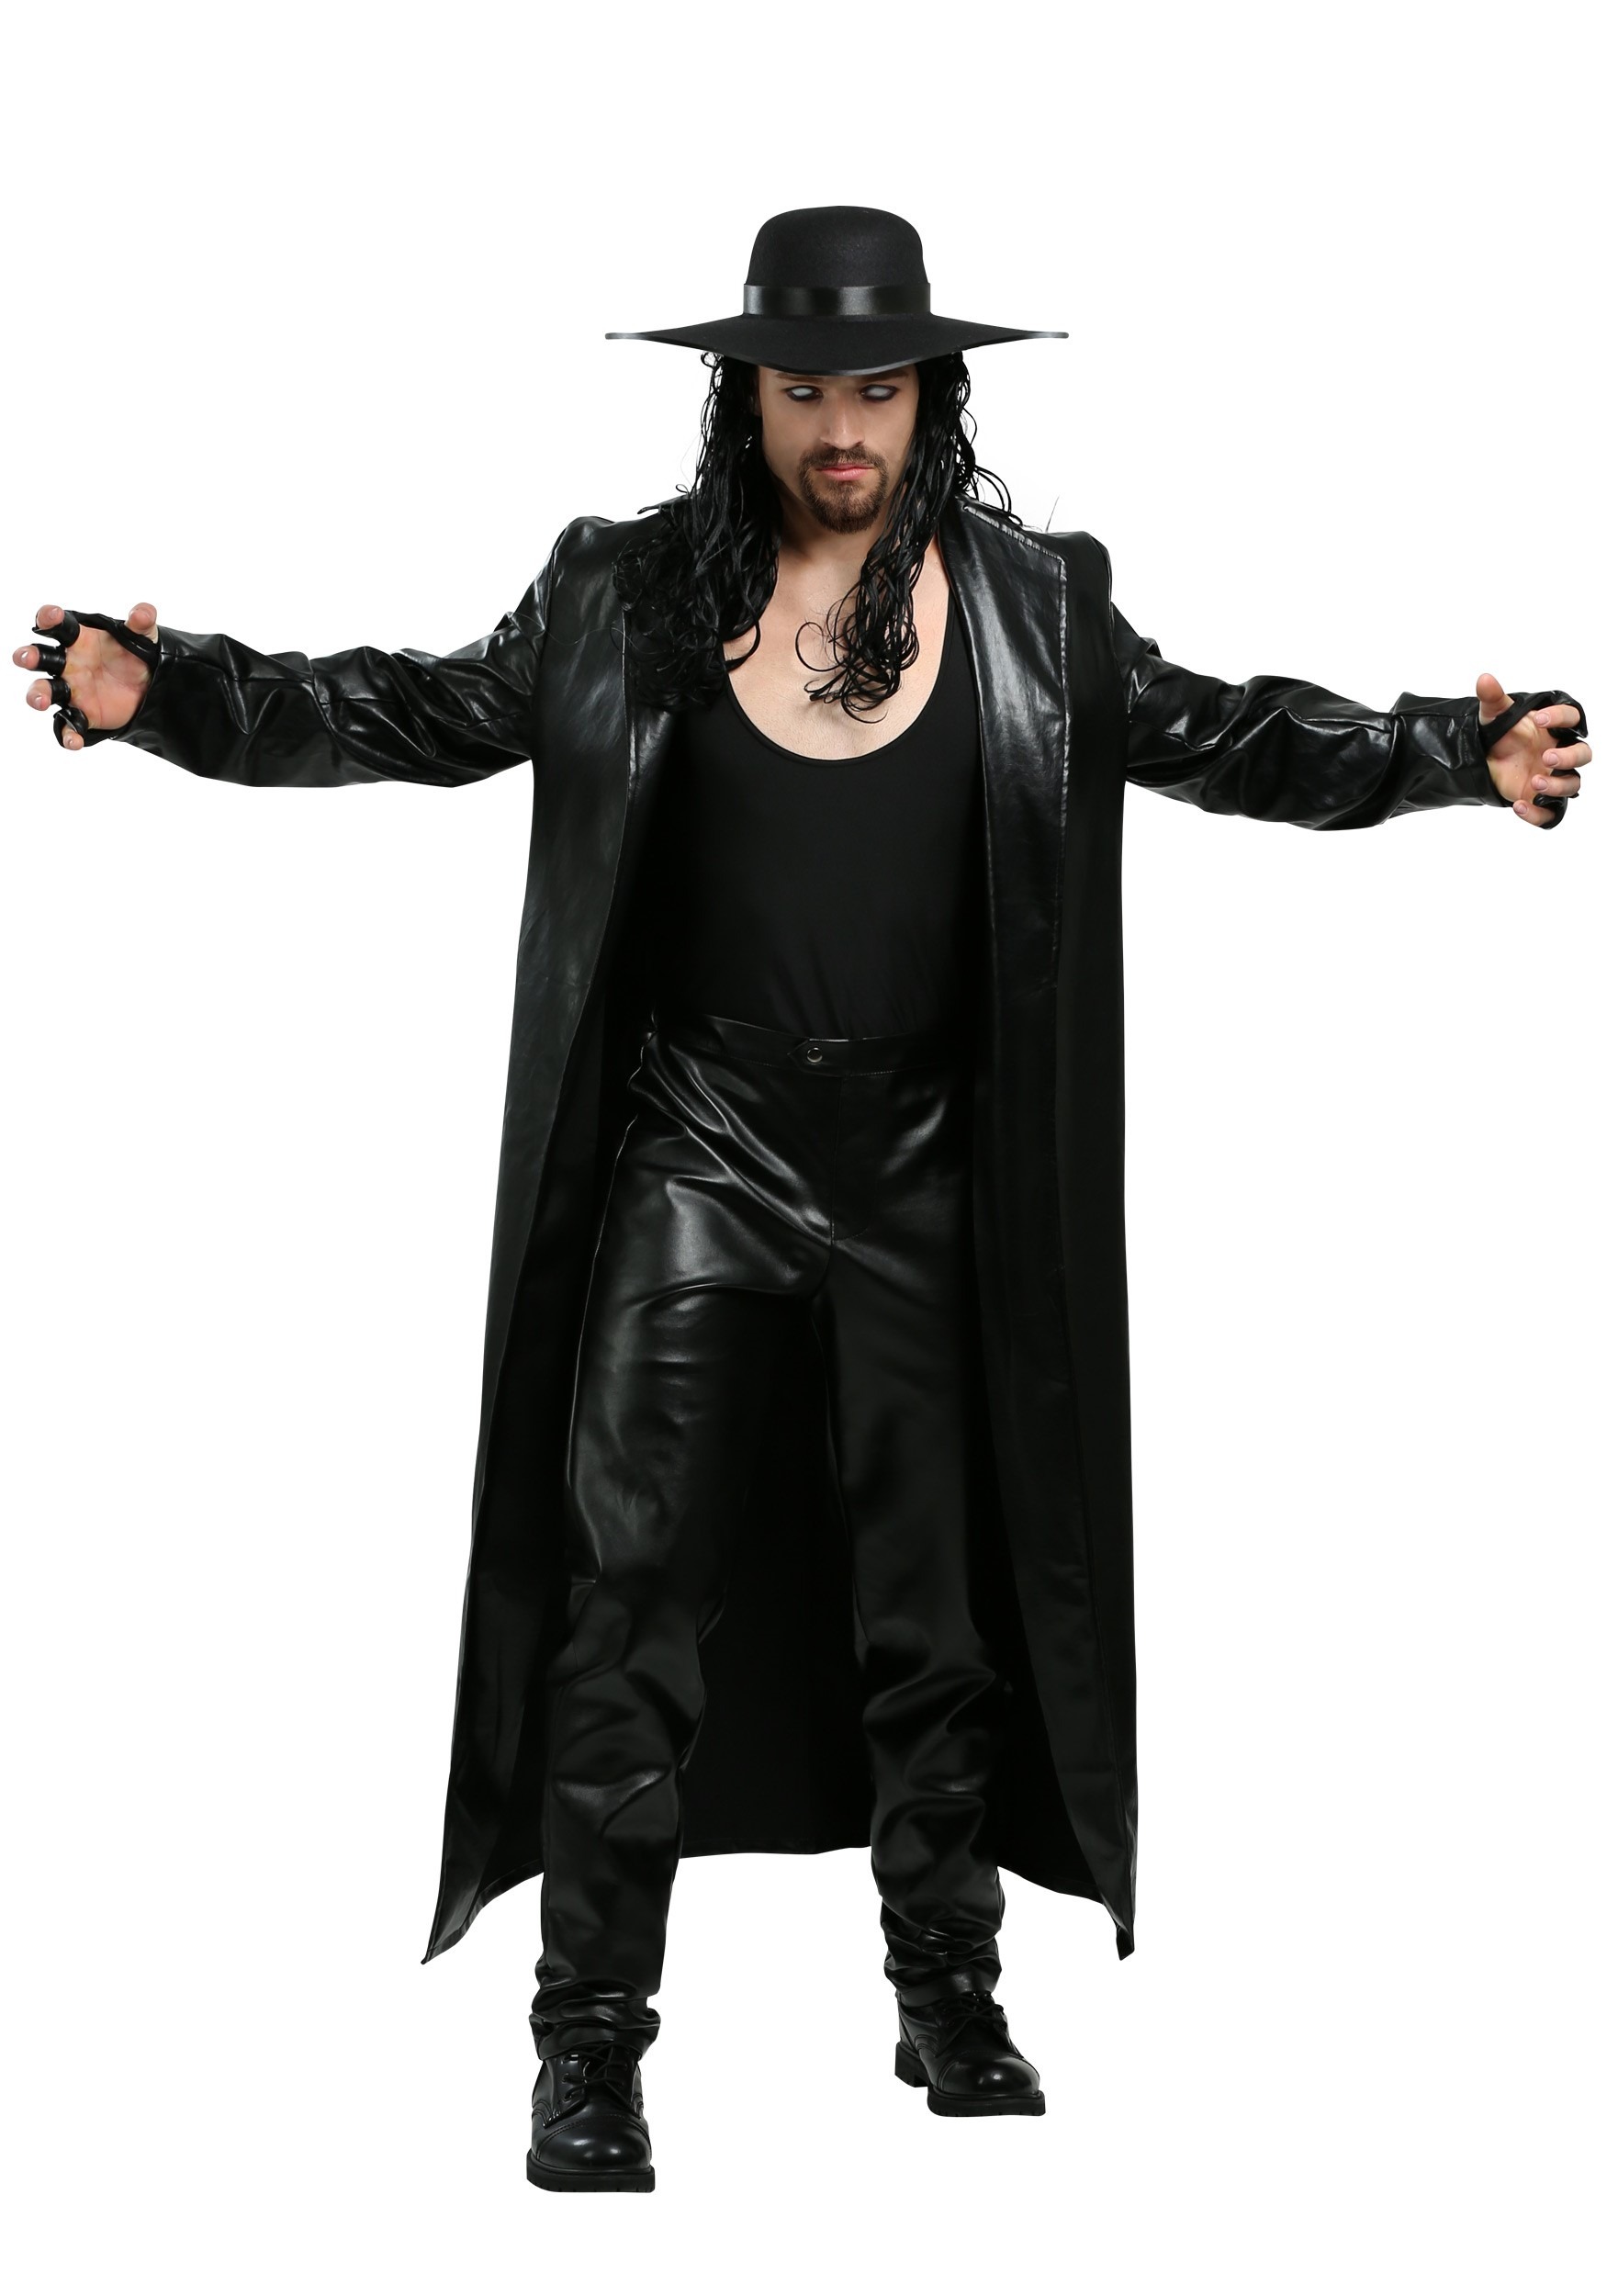 Wwe Undertaker Costume For Men